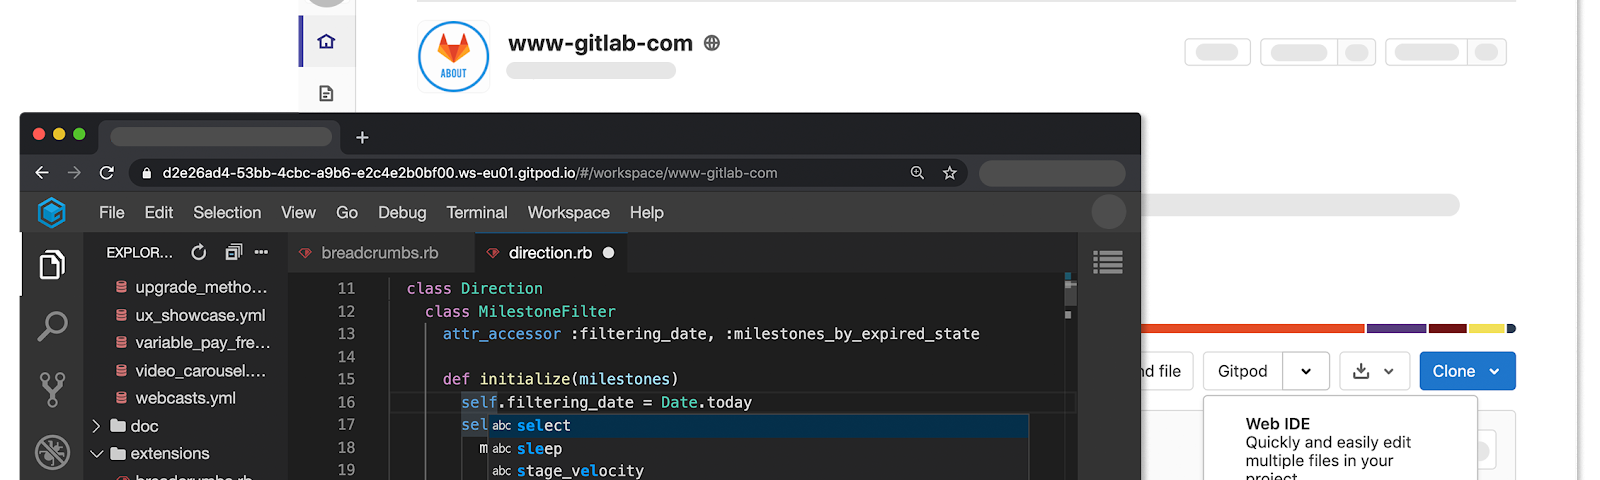 Native Gitpod integration in GitLab